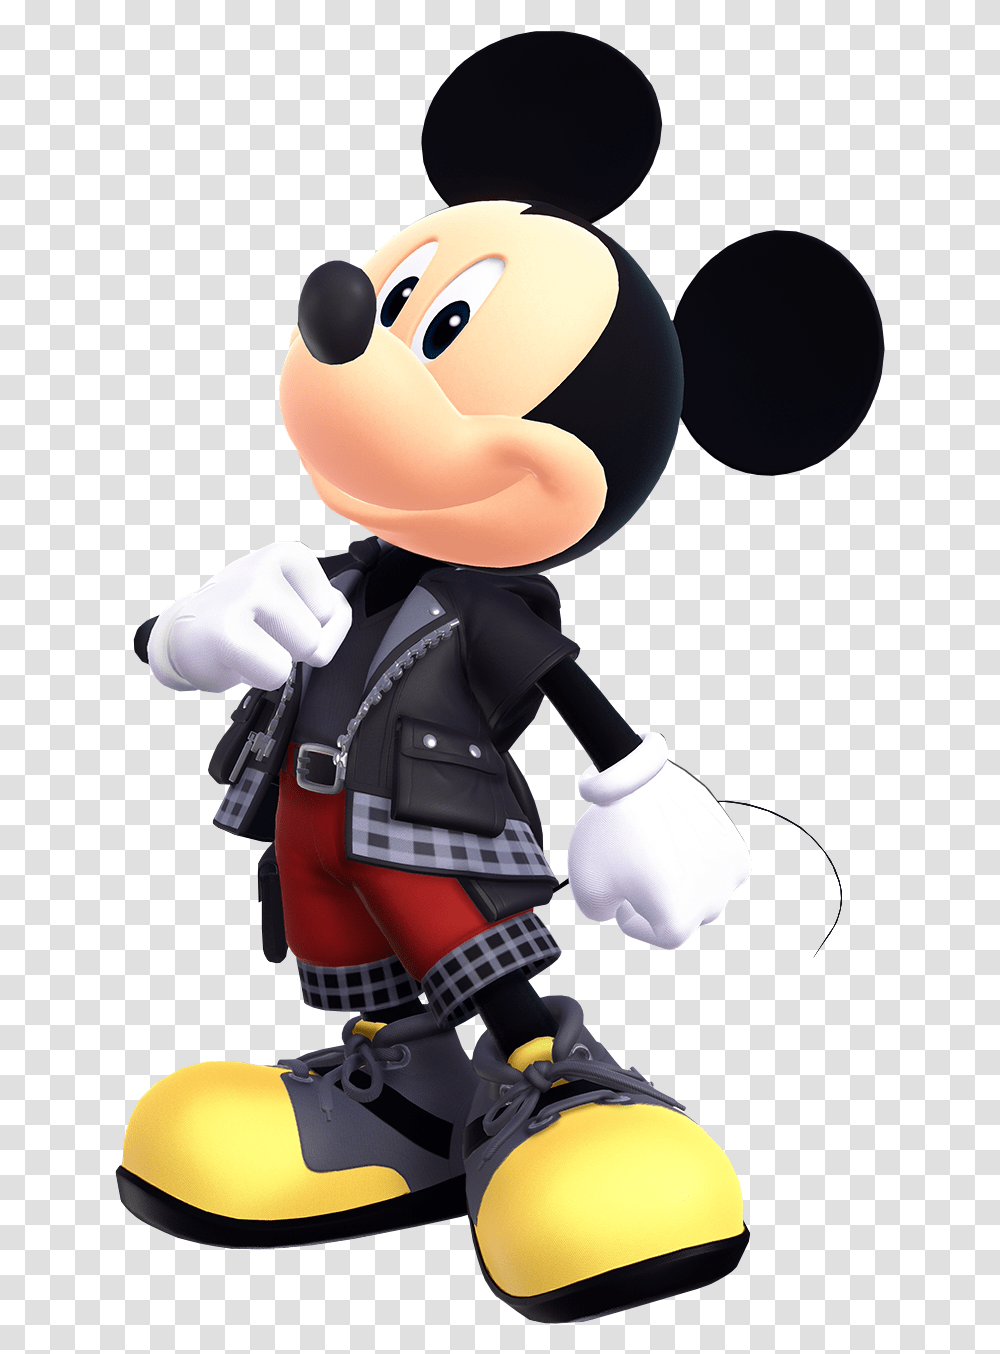 Mickey Mouse 01 Khiii Kingdom Hearts 3 King Mickey, Toy, Hand, Ninja, Figurine Transparent Png